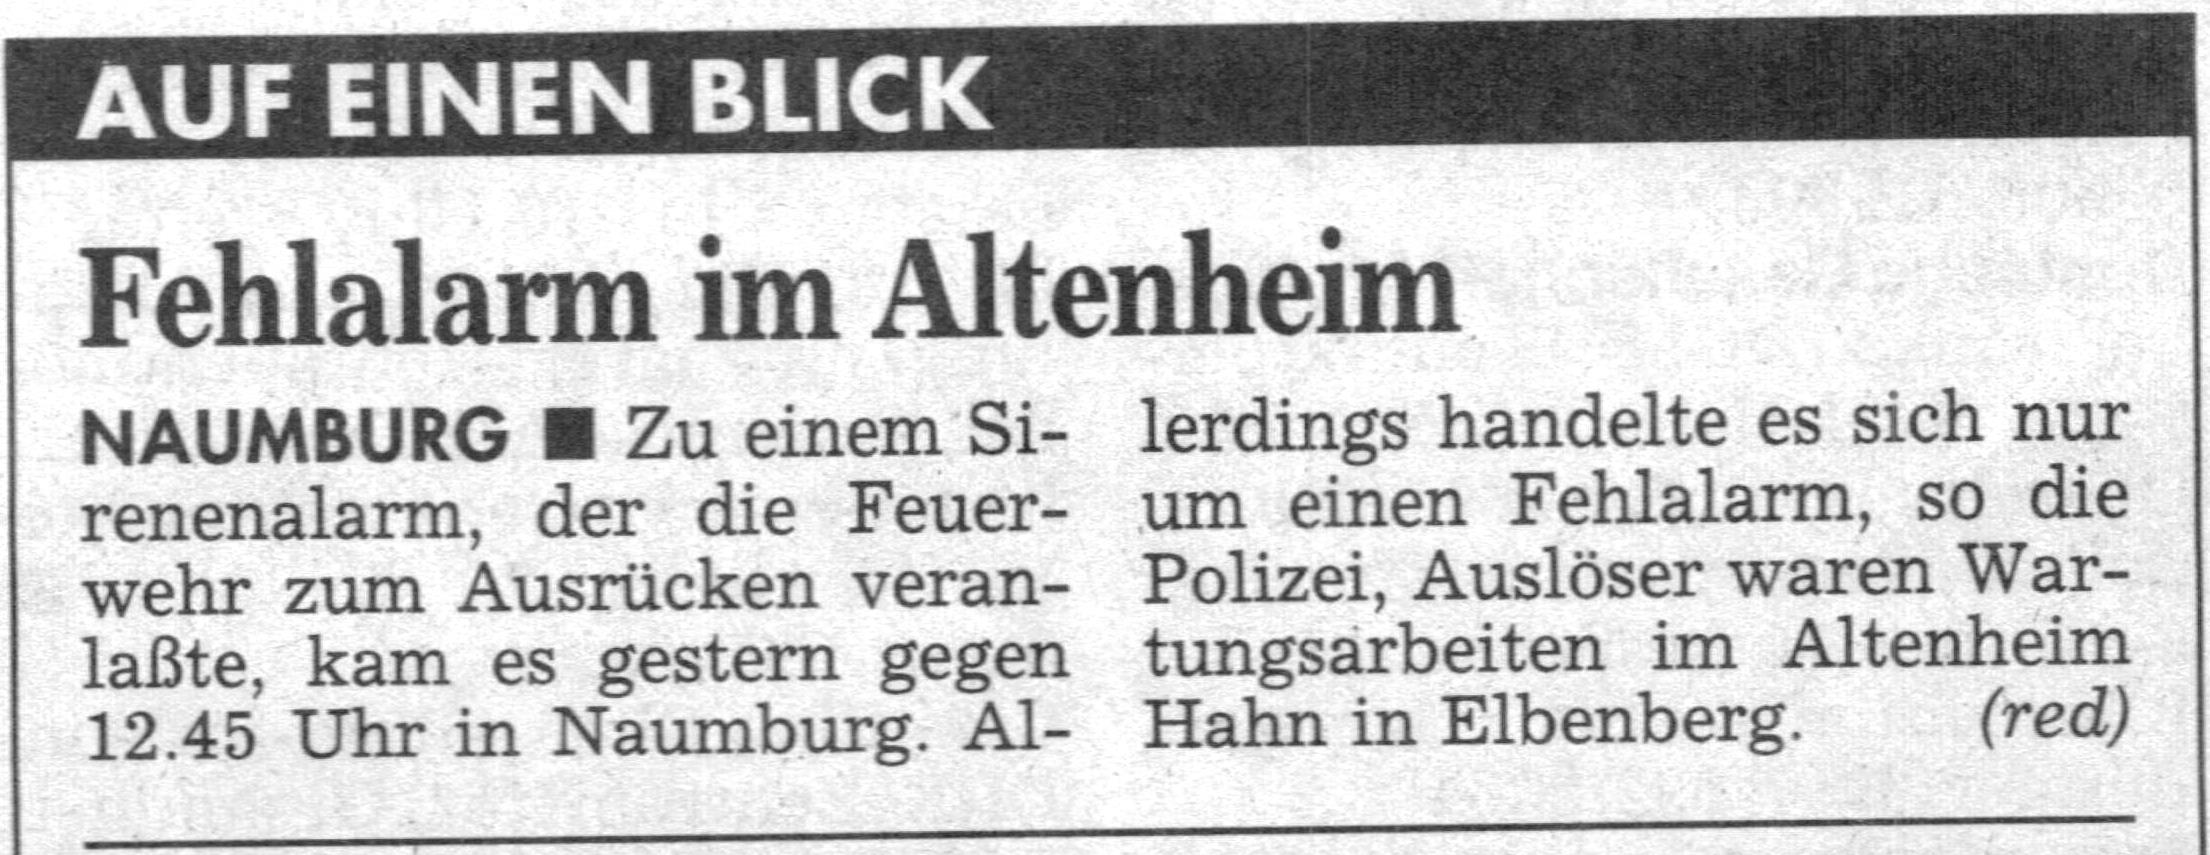 1999 07 30 Fehlalarm im Altenheim Hahn